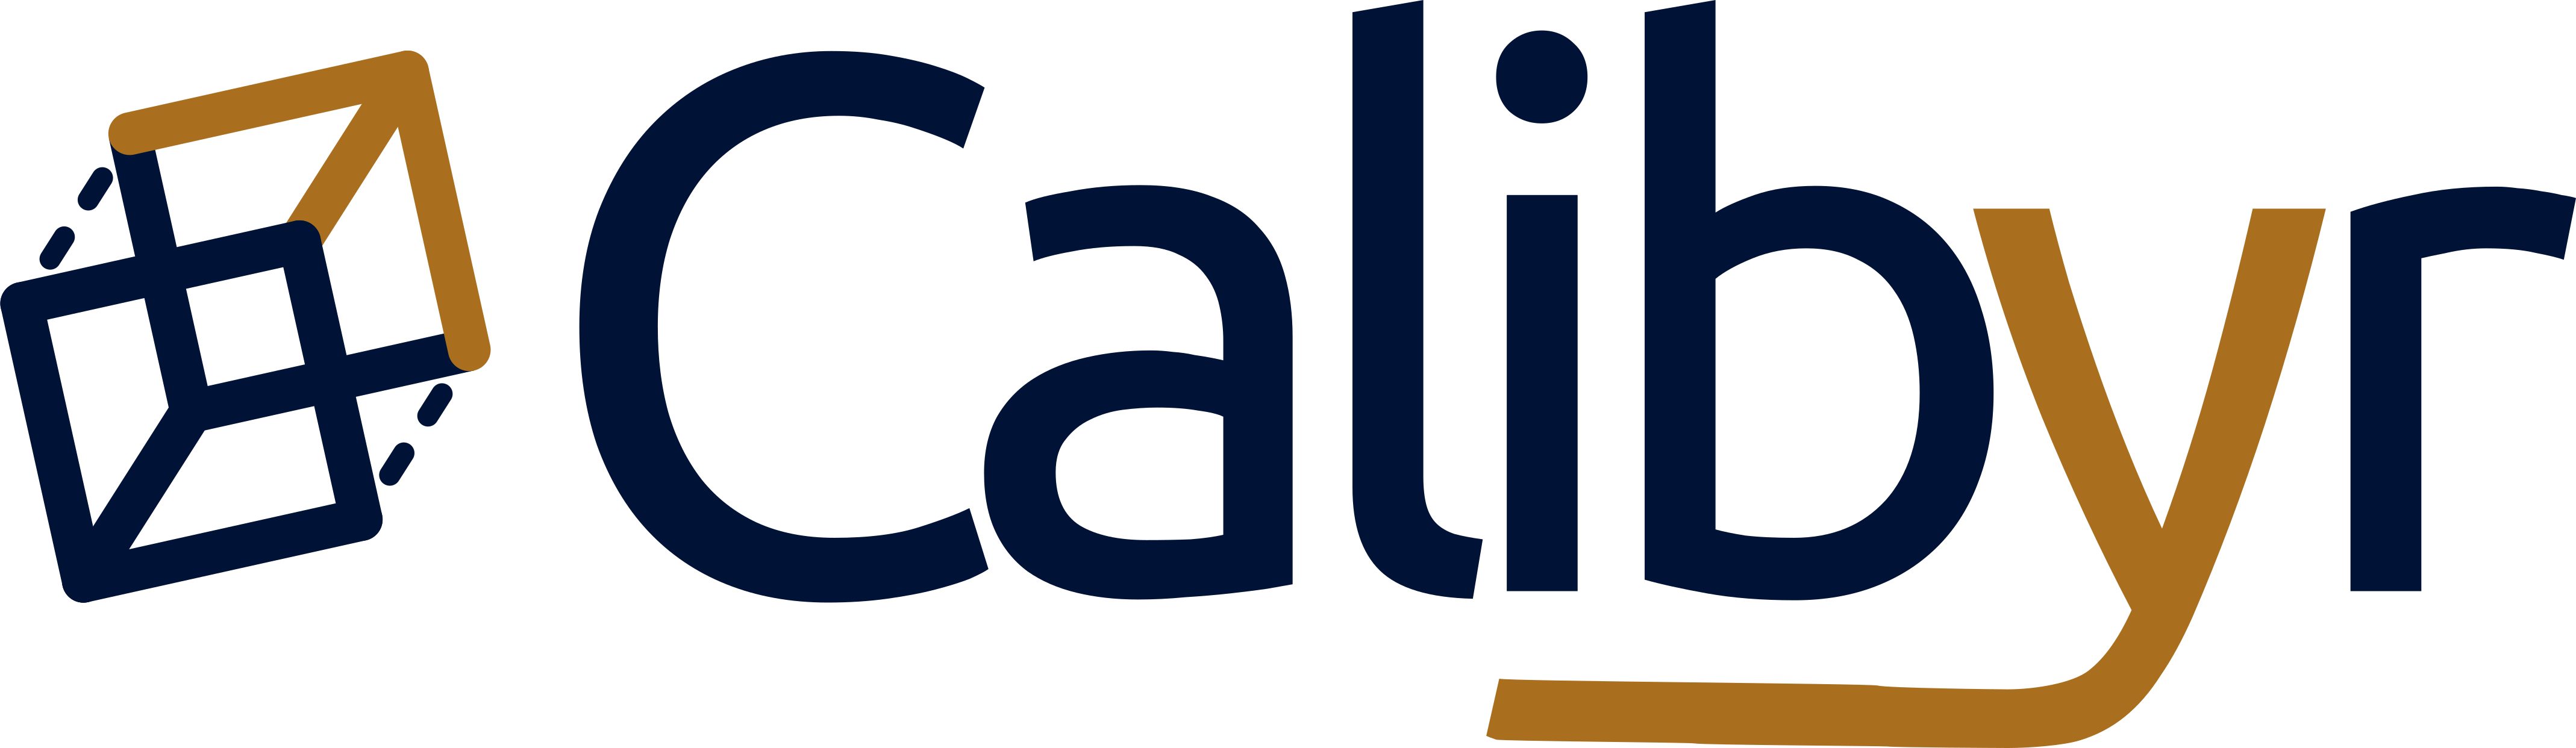 Calibyr Homepage